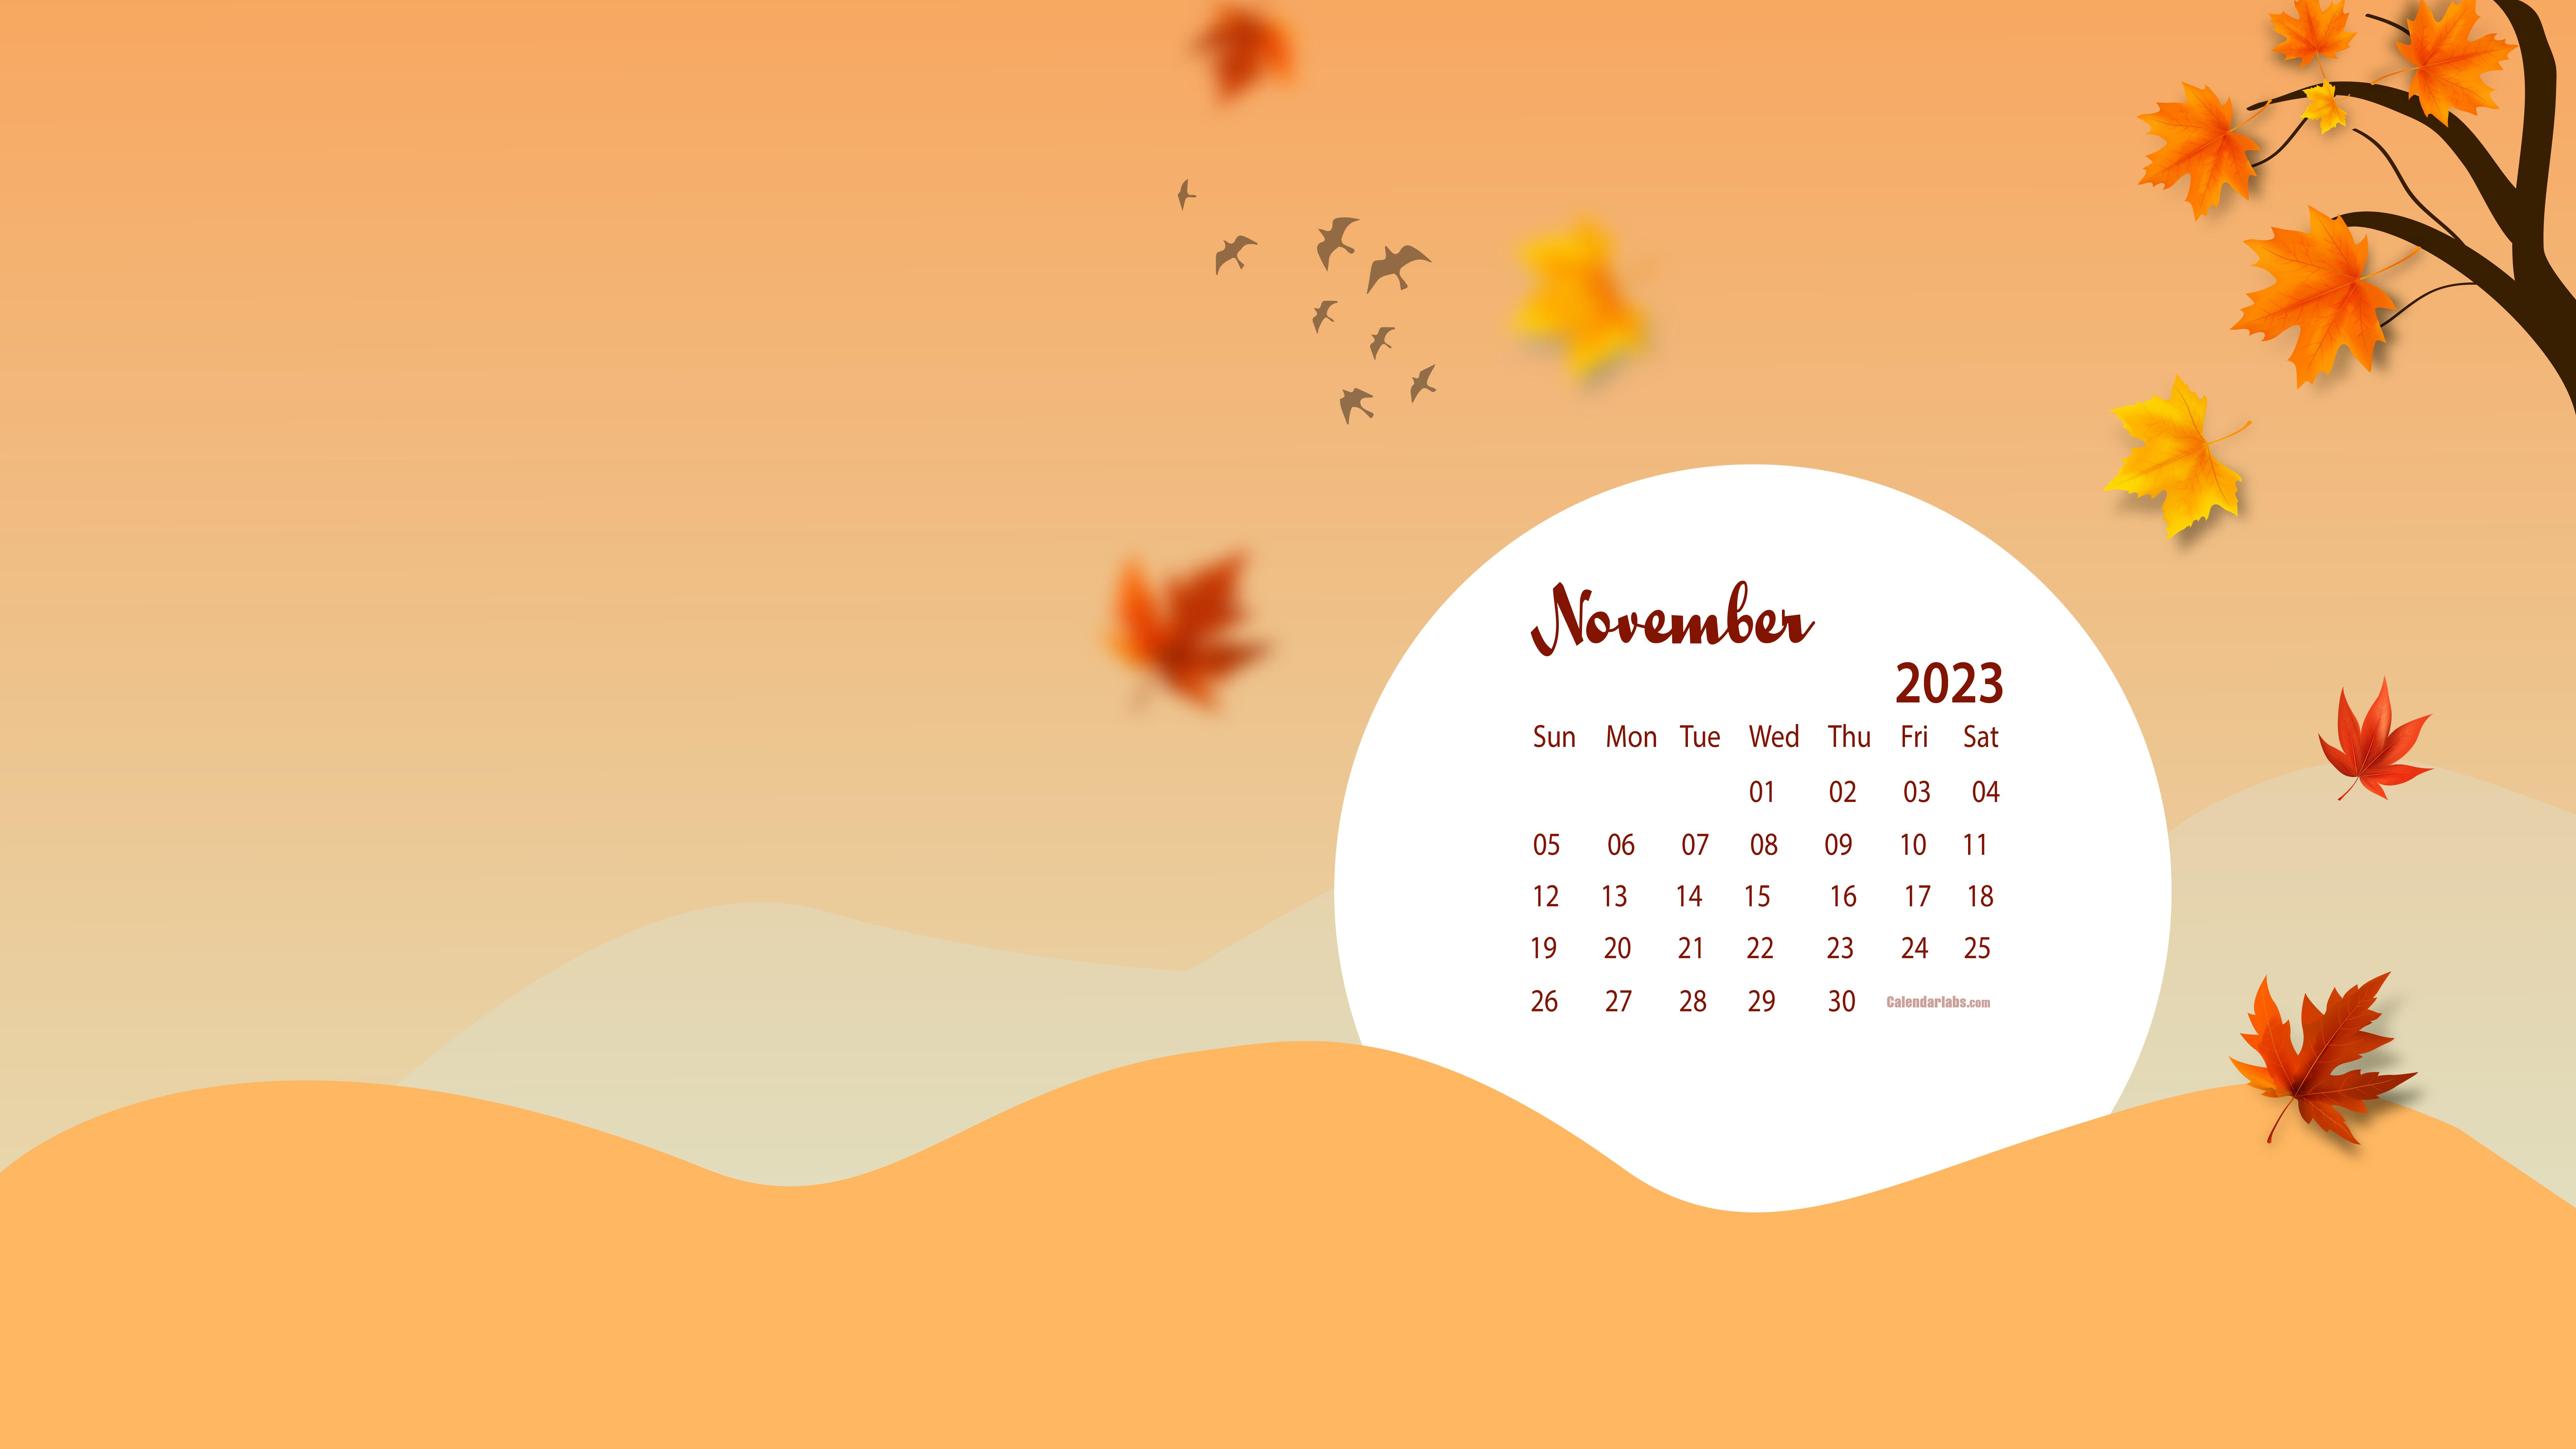 November Desktop Wallpaper Calendar Calendarlabs